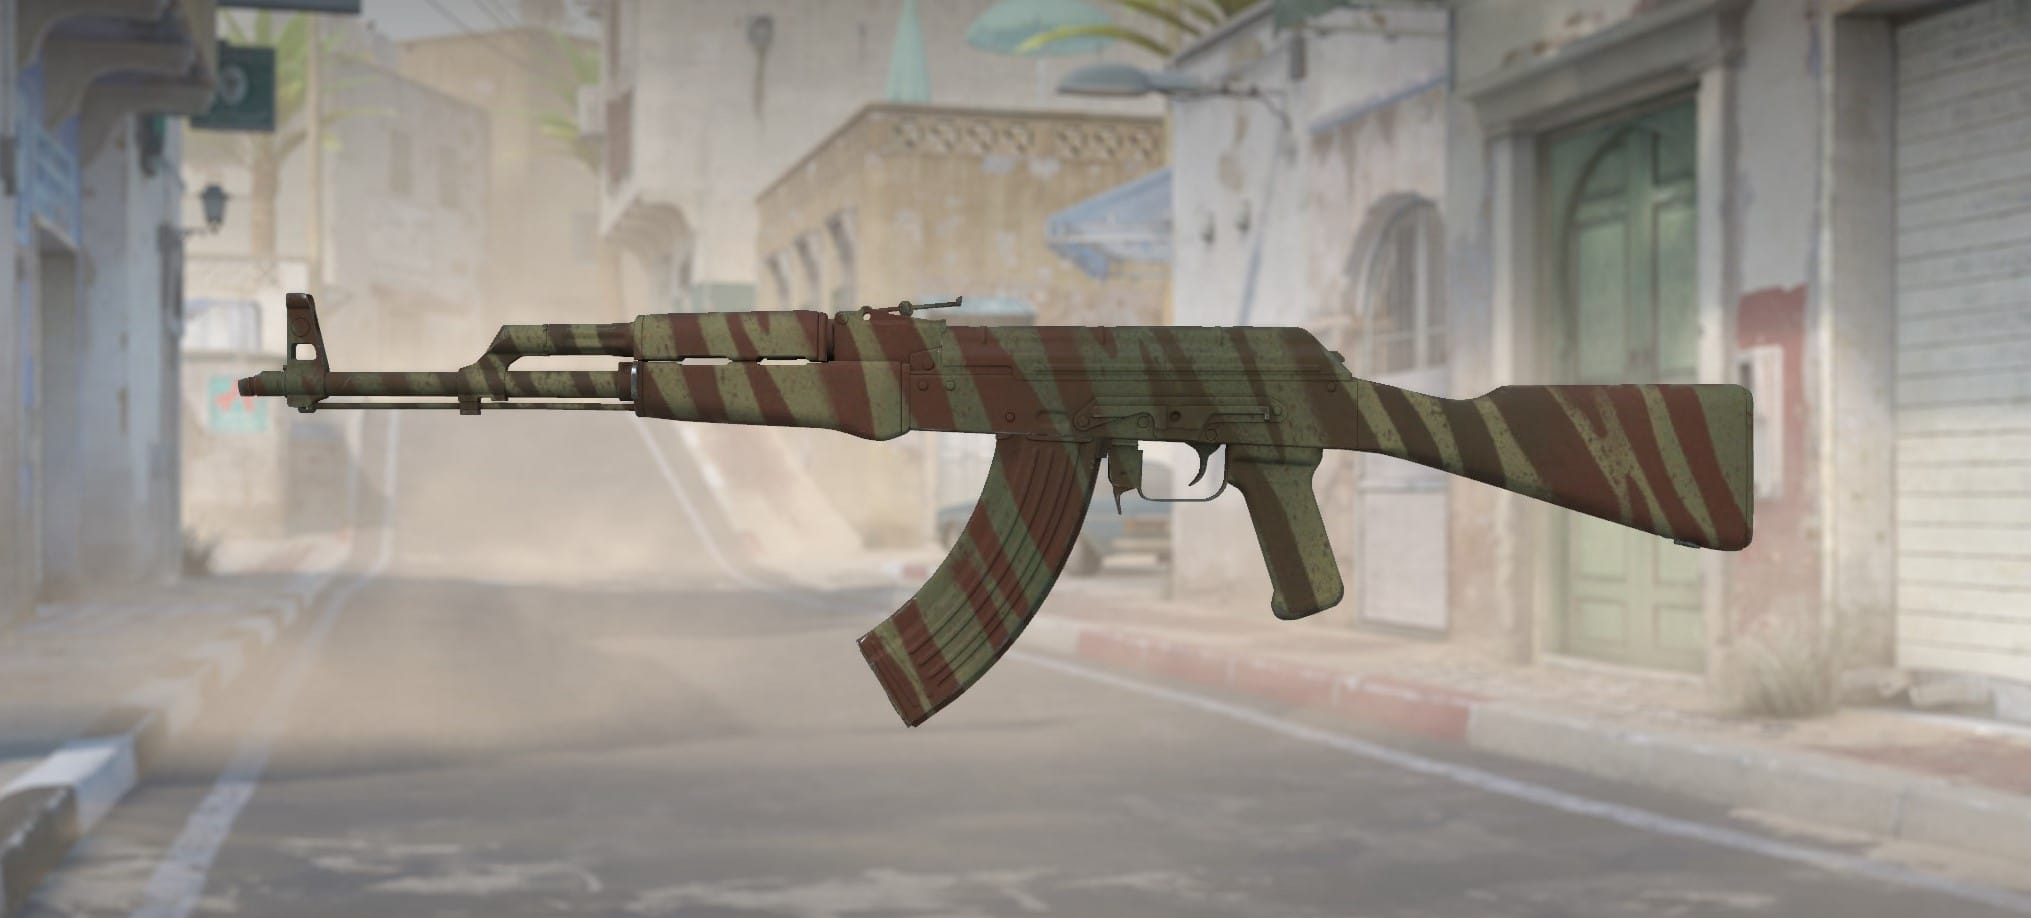 AK-47 depredador